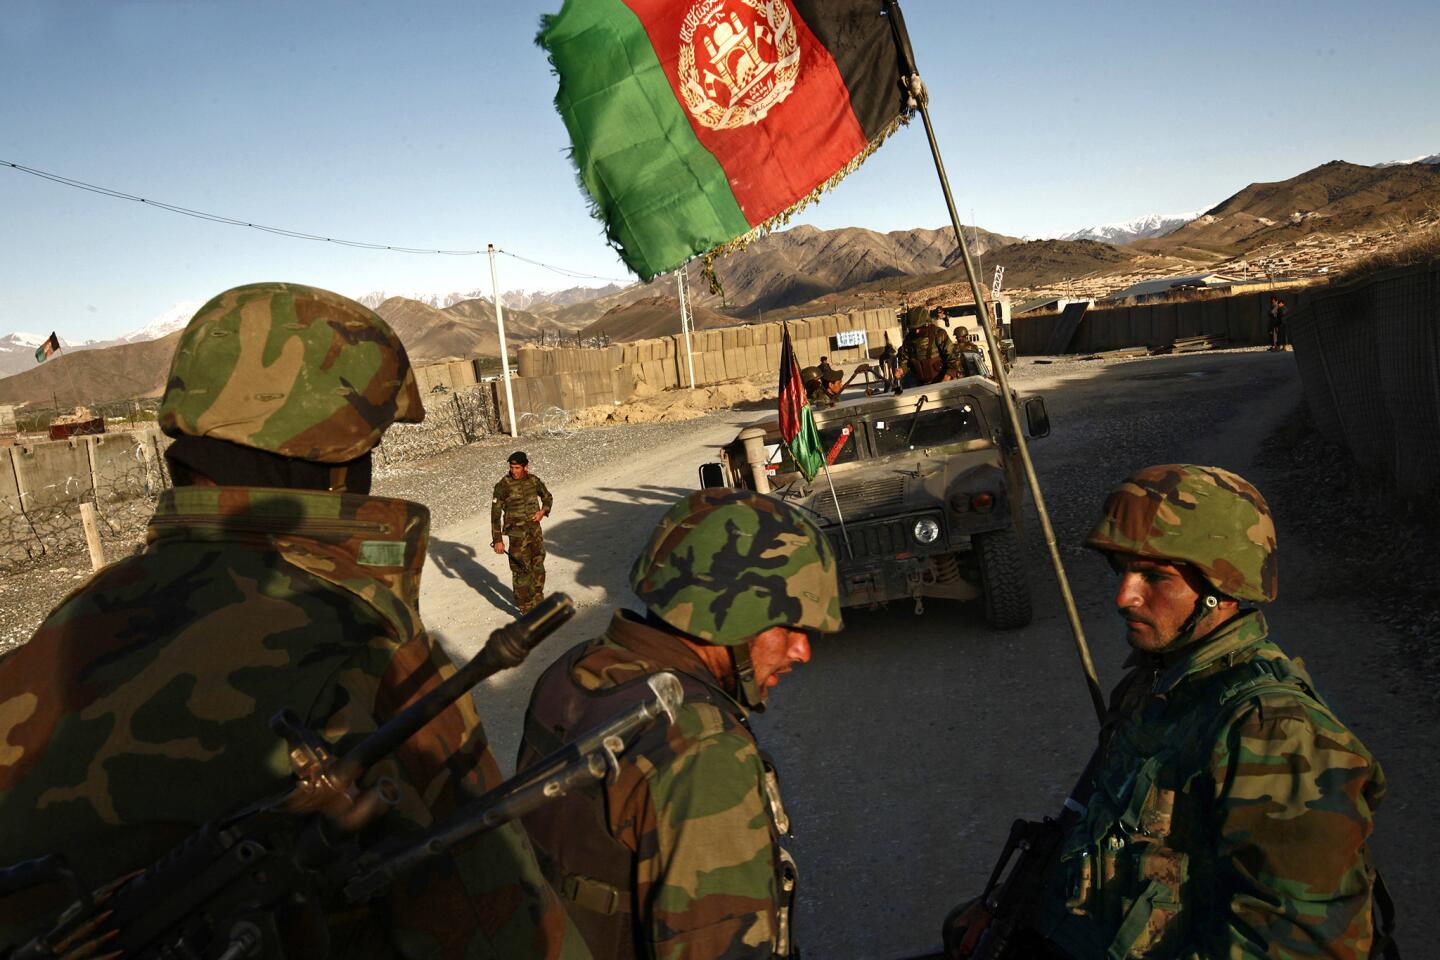 Afghanistan colonel Kohadamani Hamidullah